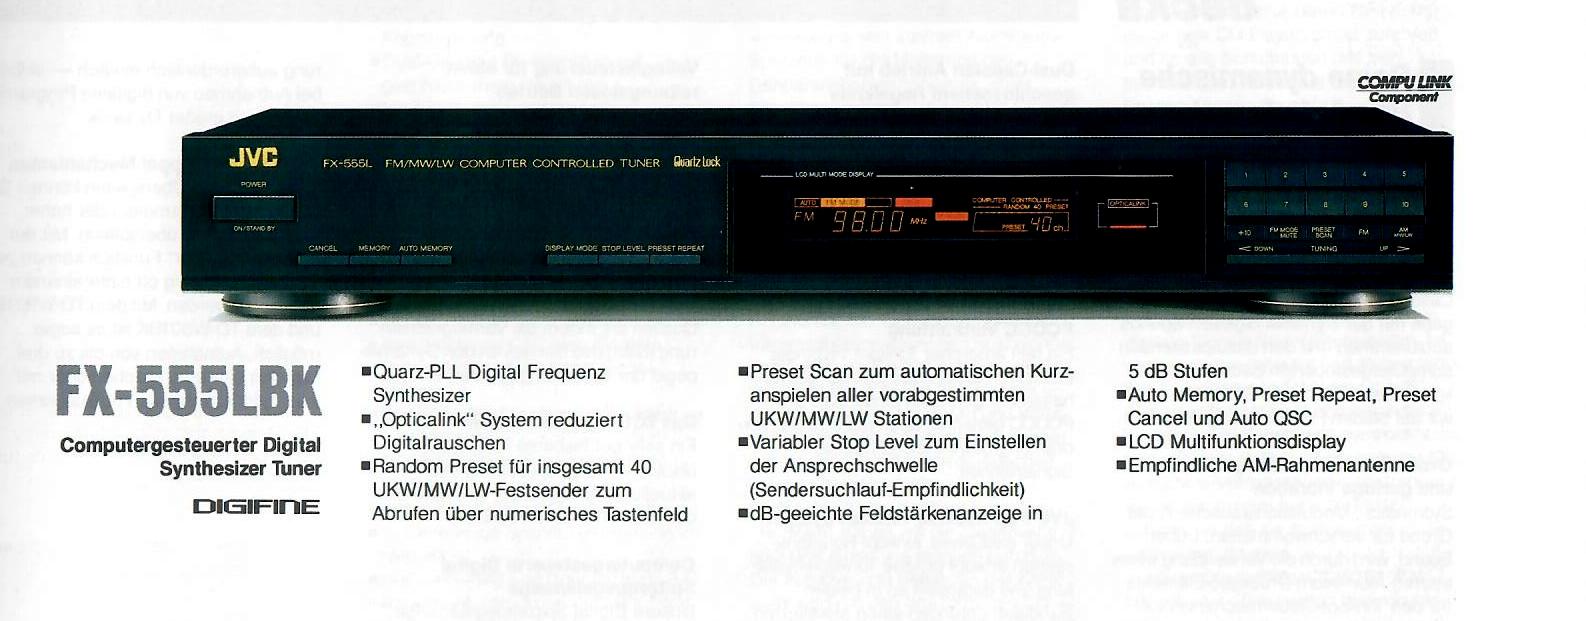 JVC FX-555 LBK-Prospekt-1989.jpg